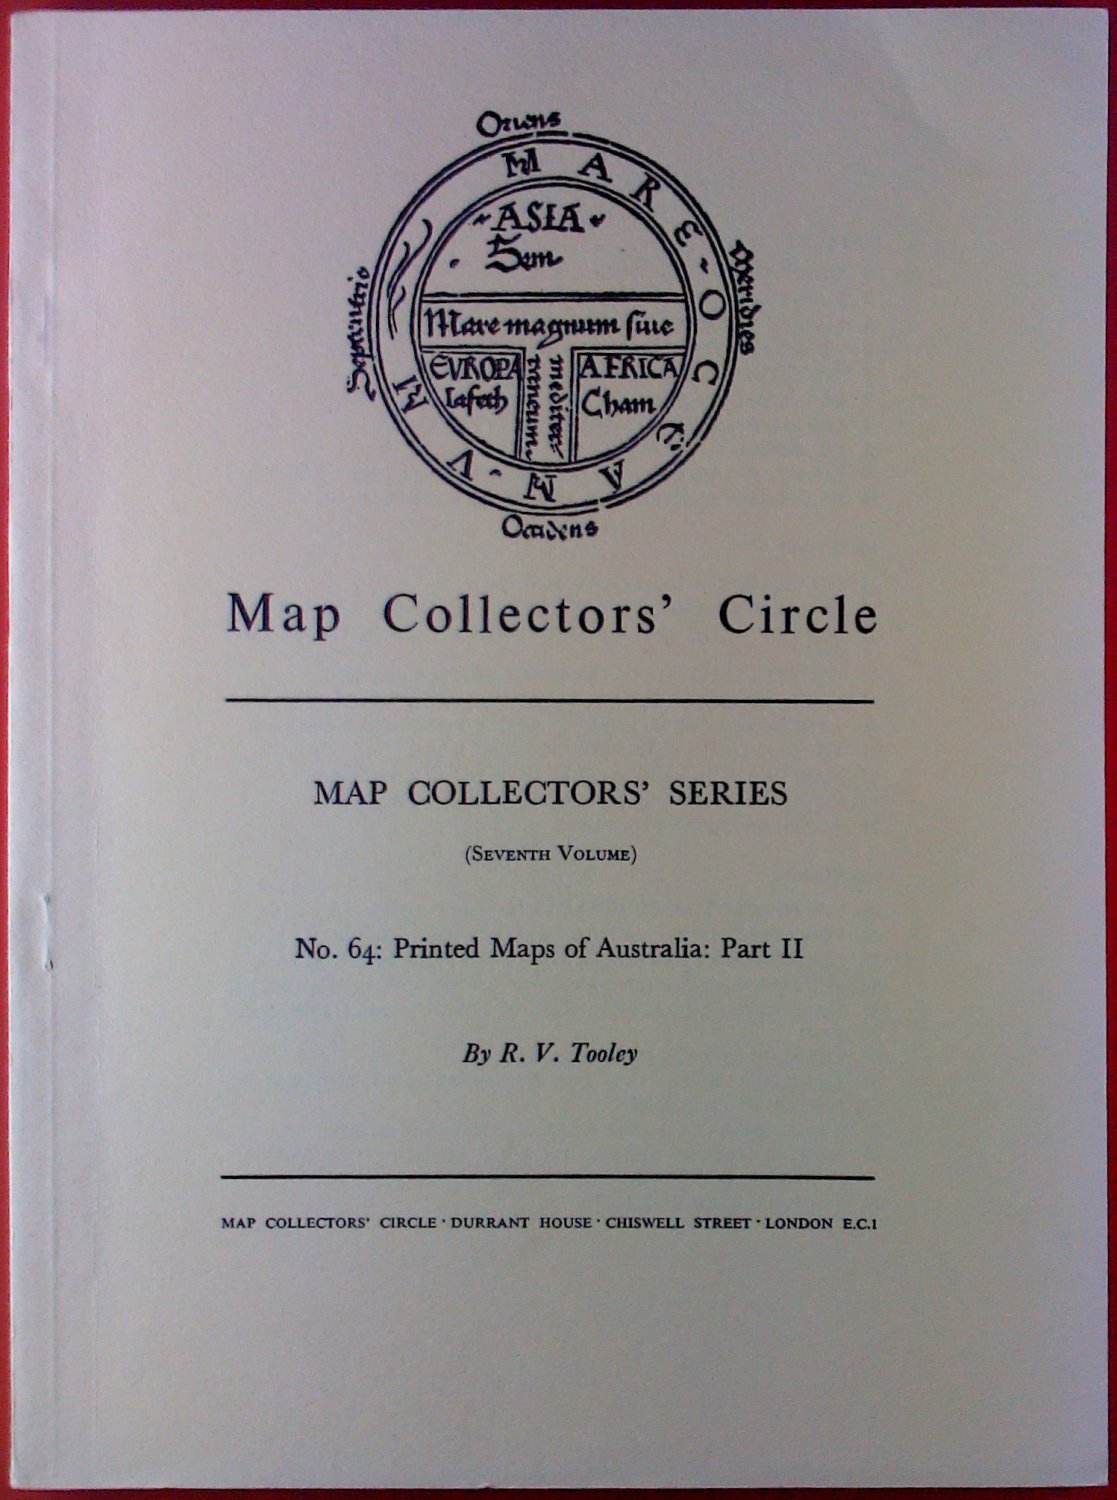 Map Collectors Circle Map Collectors Series Seventh Volume No 64 Printed Maps Of Australia Part II 